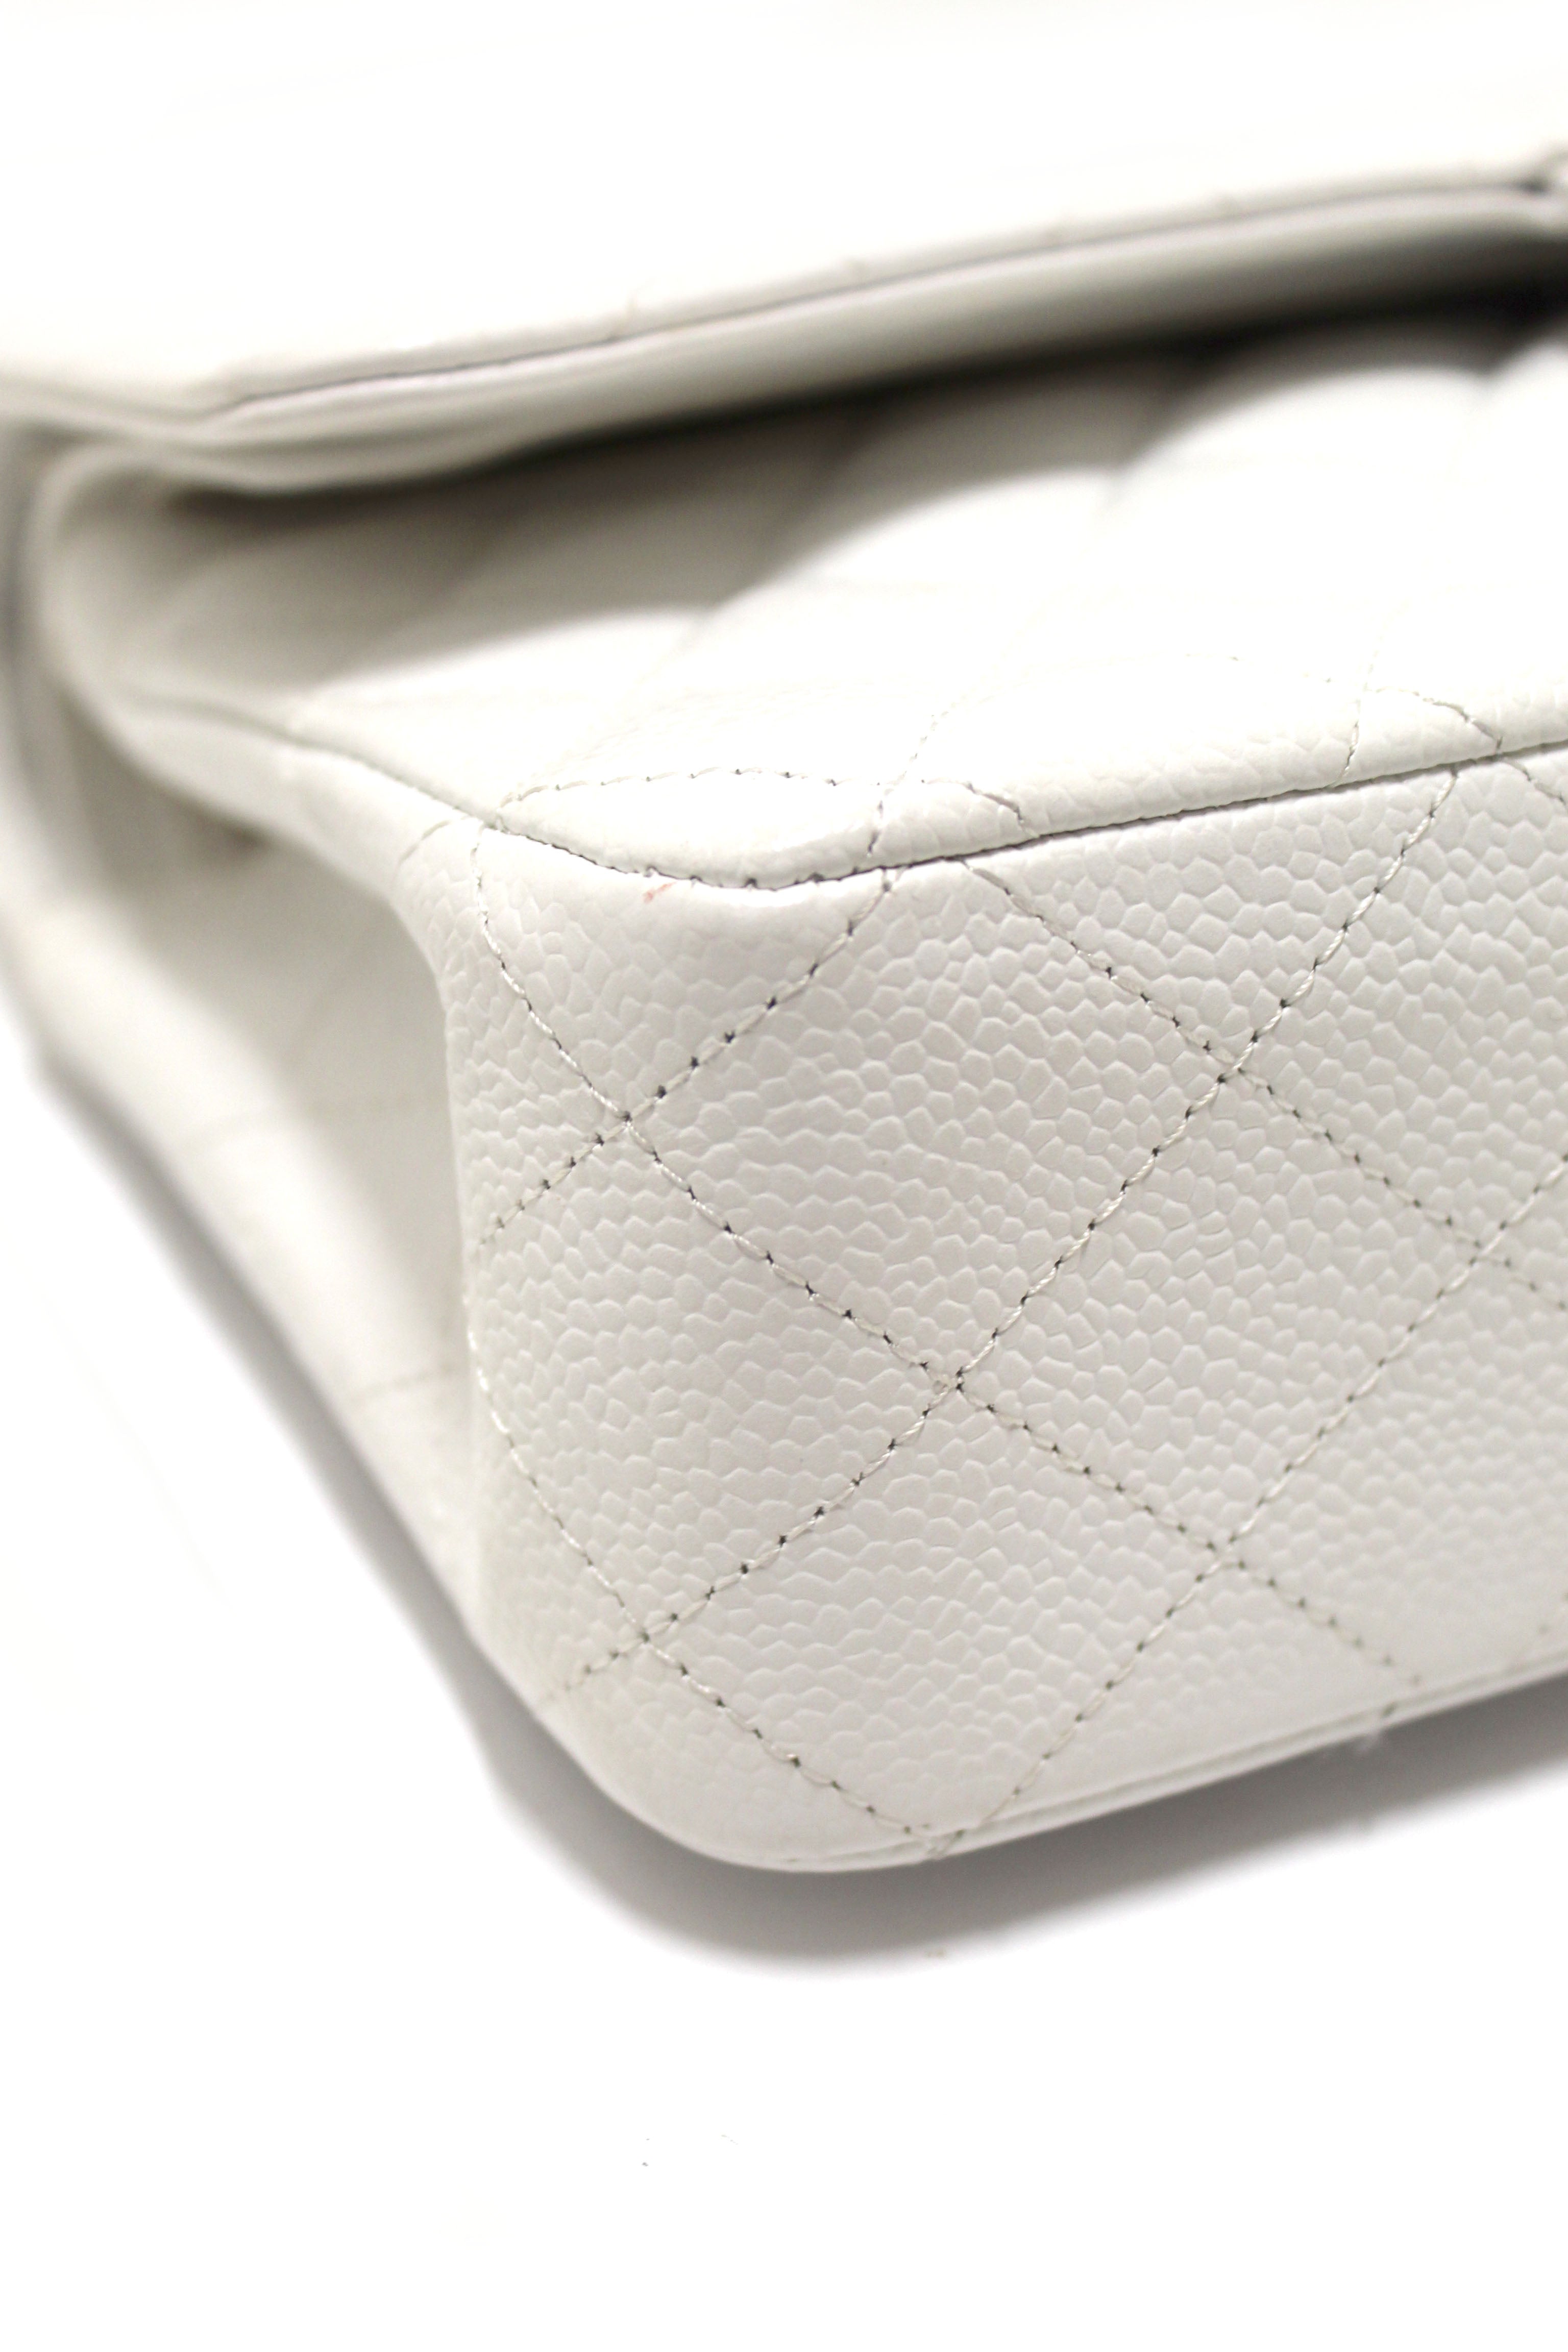 Authentic Chanel White Caviar Leather Medium Classic Flap Chain Handbag